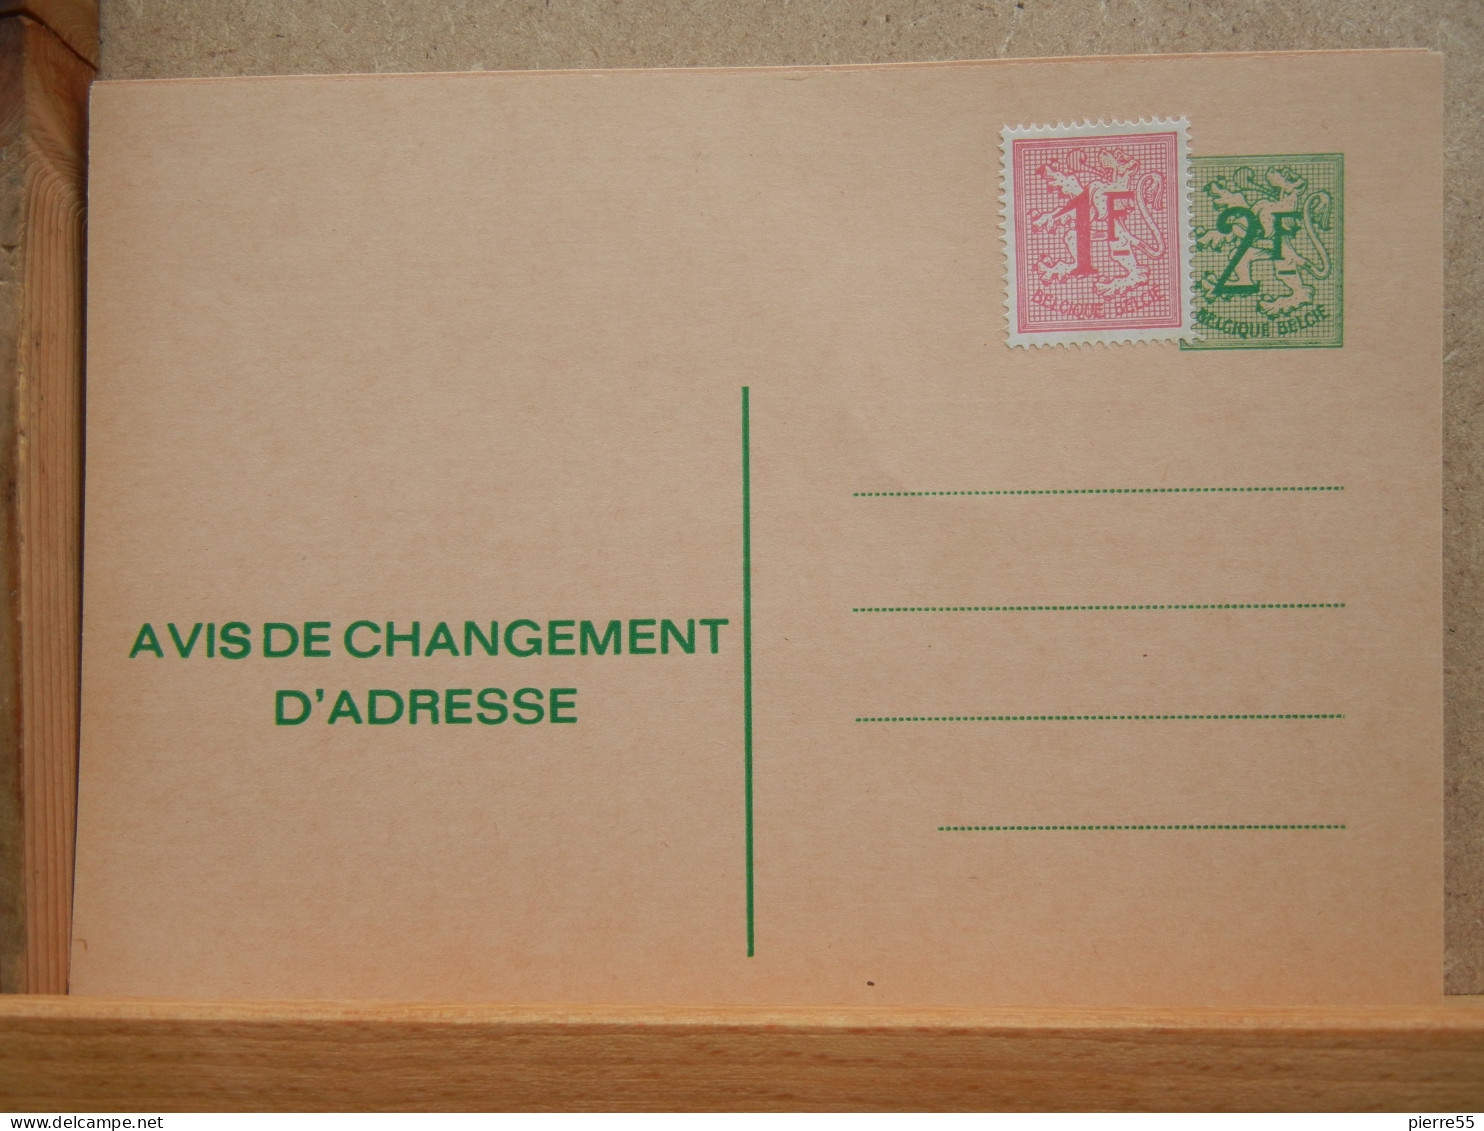 EP - Avis Changement Adresse - 2Fr Lin Vert + 1F Complément Lion Rouge - Neuf - Addr. Chang.